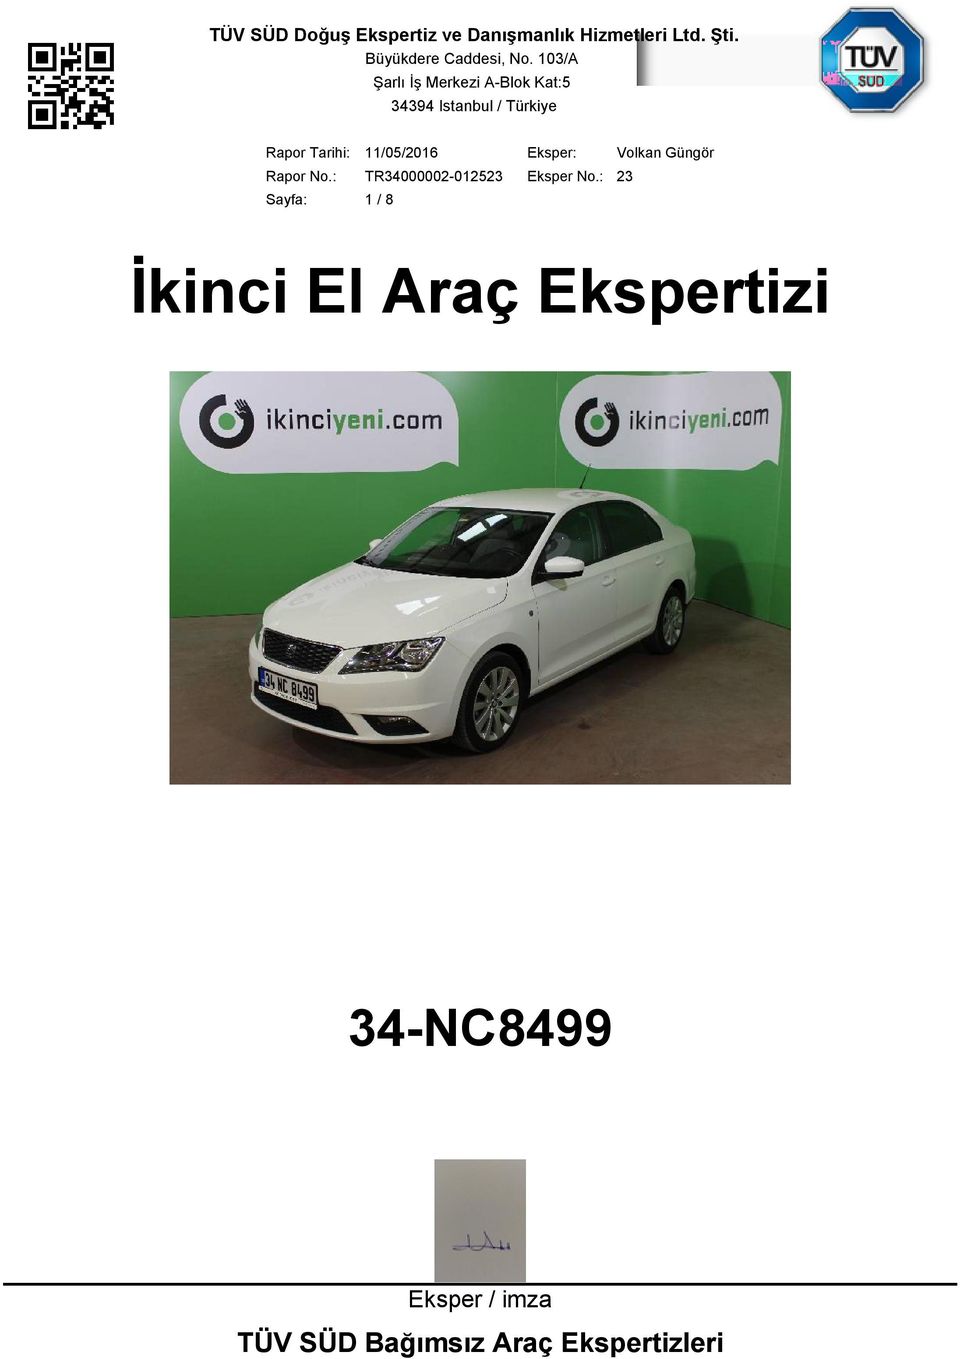 34-NC8499 Eksper / imza